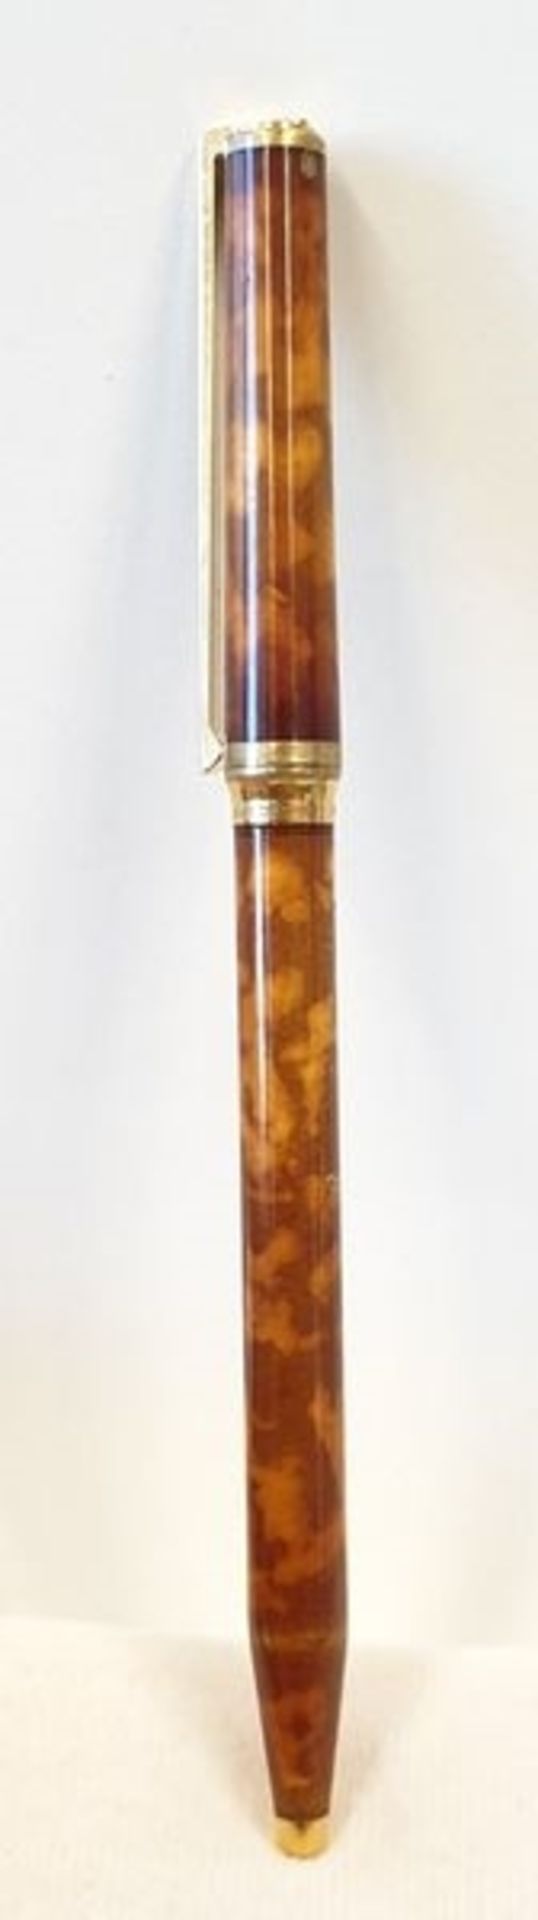 St. Dupont Kugelschreiber Laque de chine, Seriennummer: 58KFG06, - Image 3 of 3